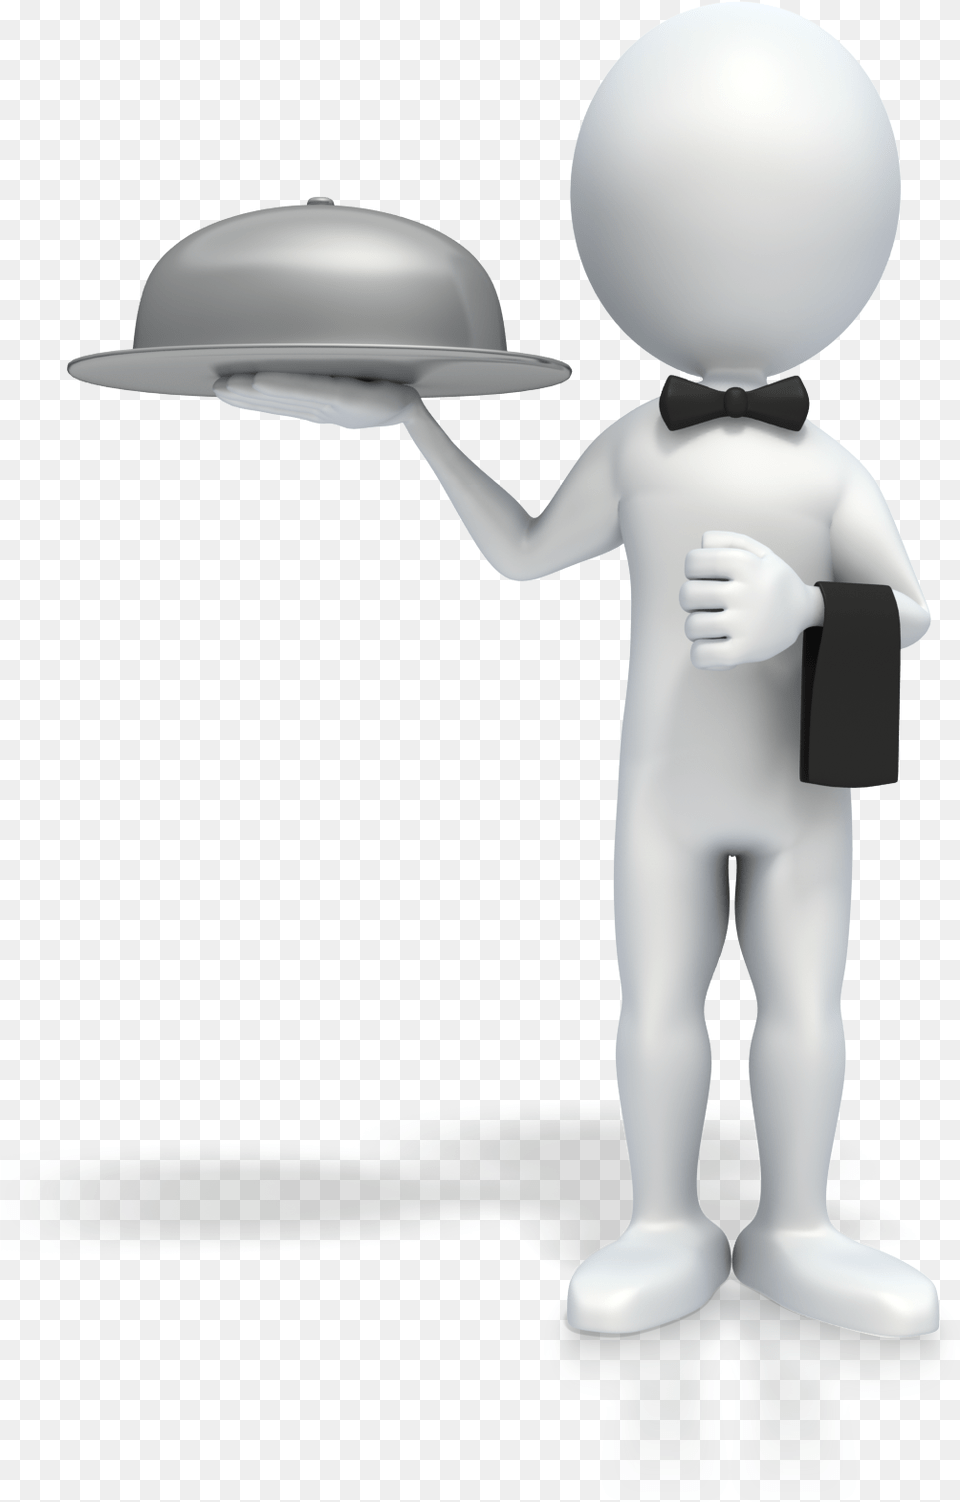 Stick Figure Waiter 1600 Clr 3d Human Stick Figures Servant Stick Figures, Clothing, Hardhat, Helmet, Glove Free Png Download